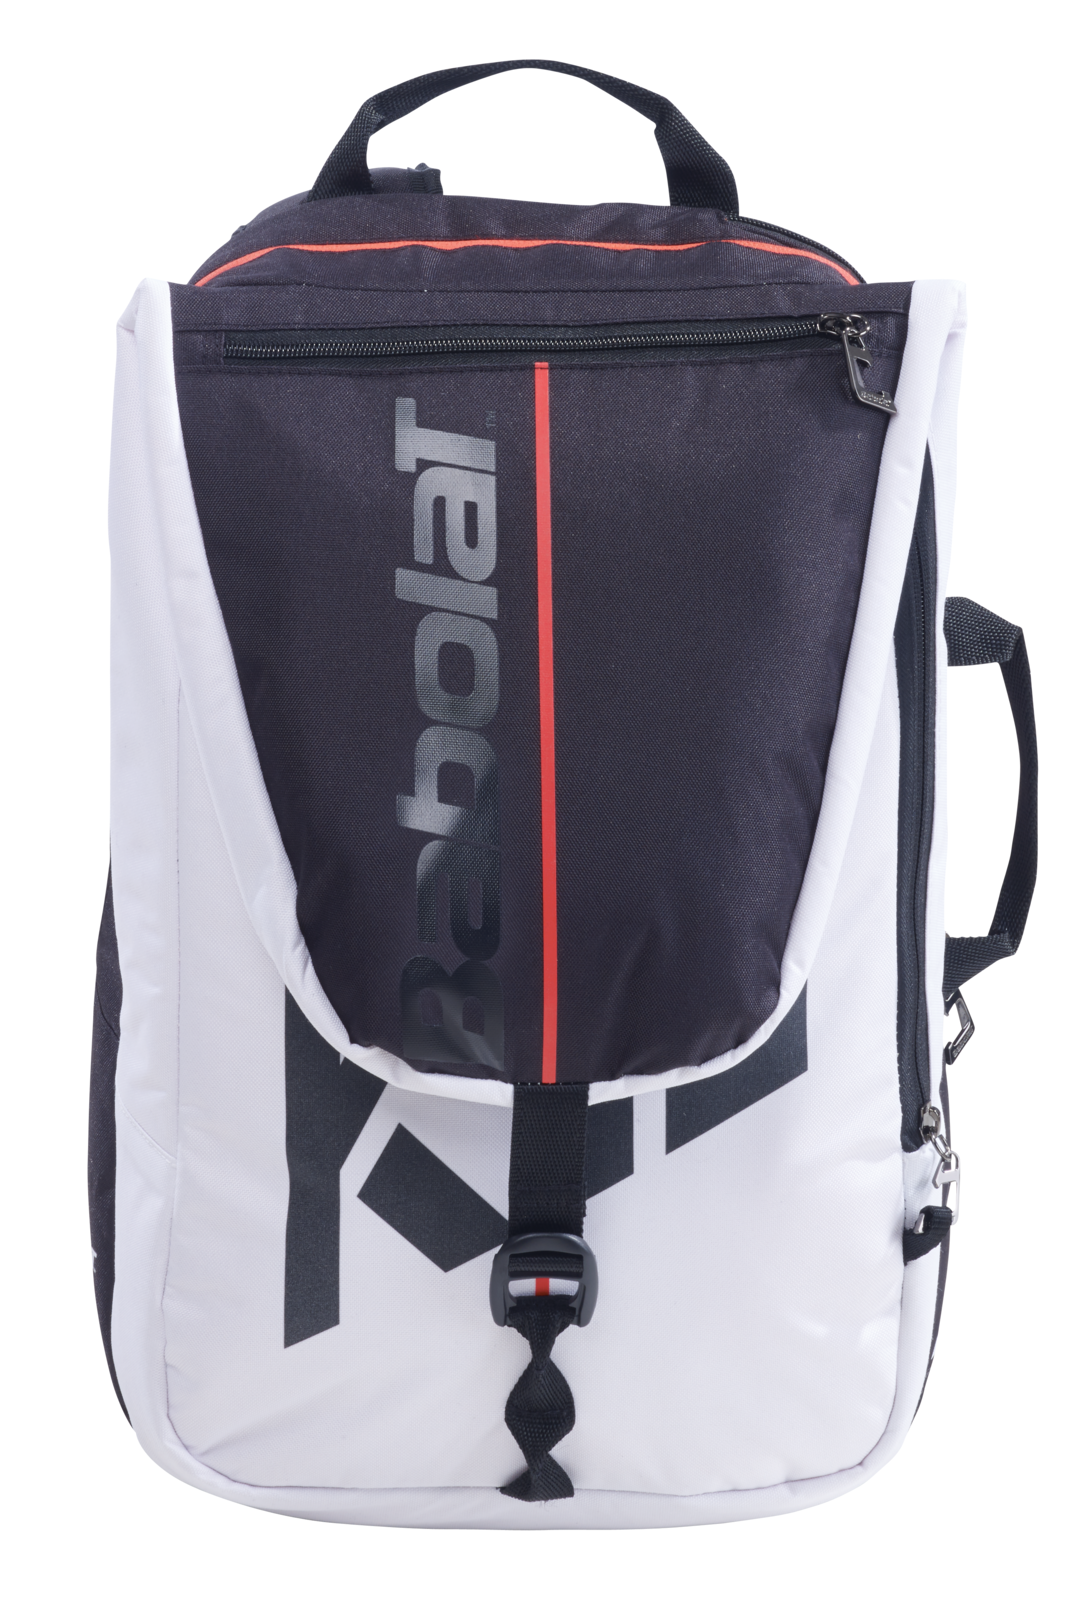 Babolat Pure Aero Backpack Bag BlackYellow  SportStation HK